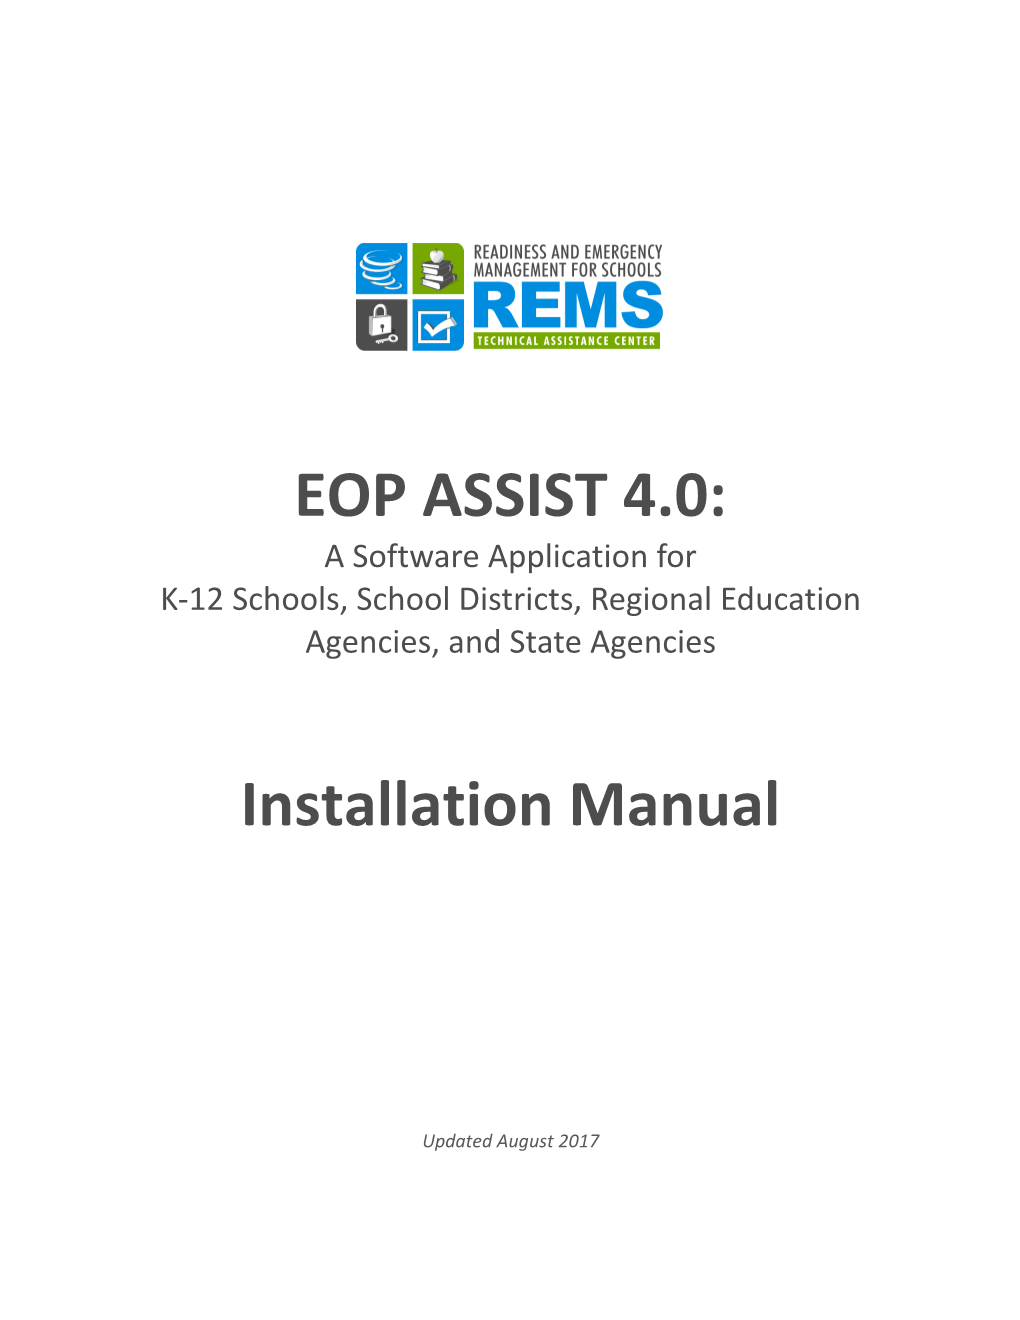 EOP ASSIST 4.0 Installation Manual